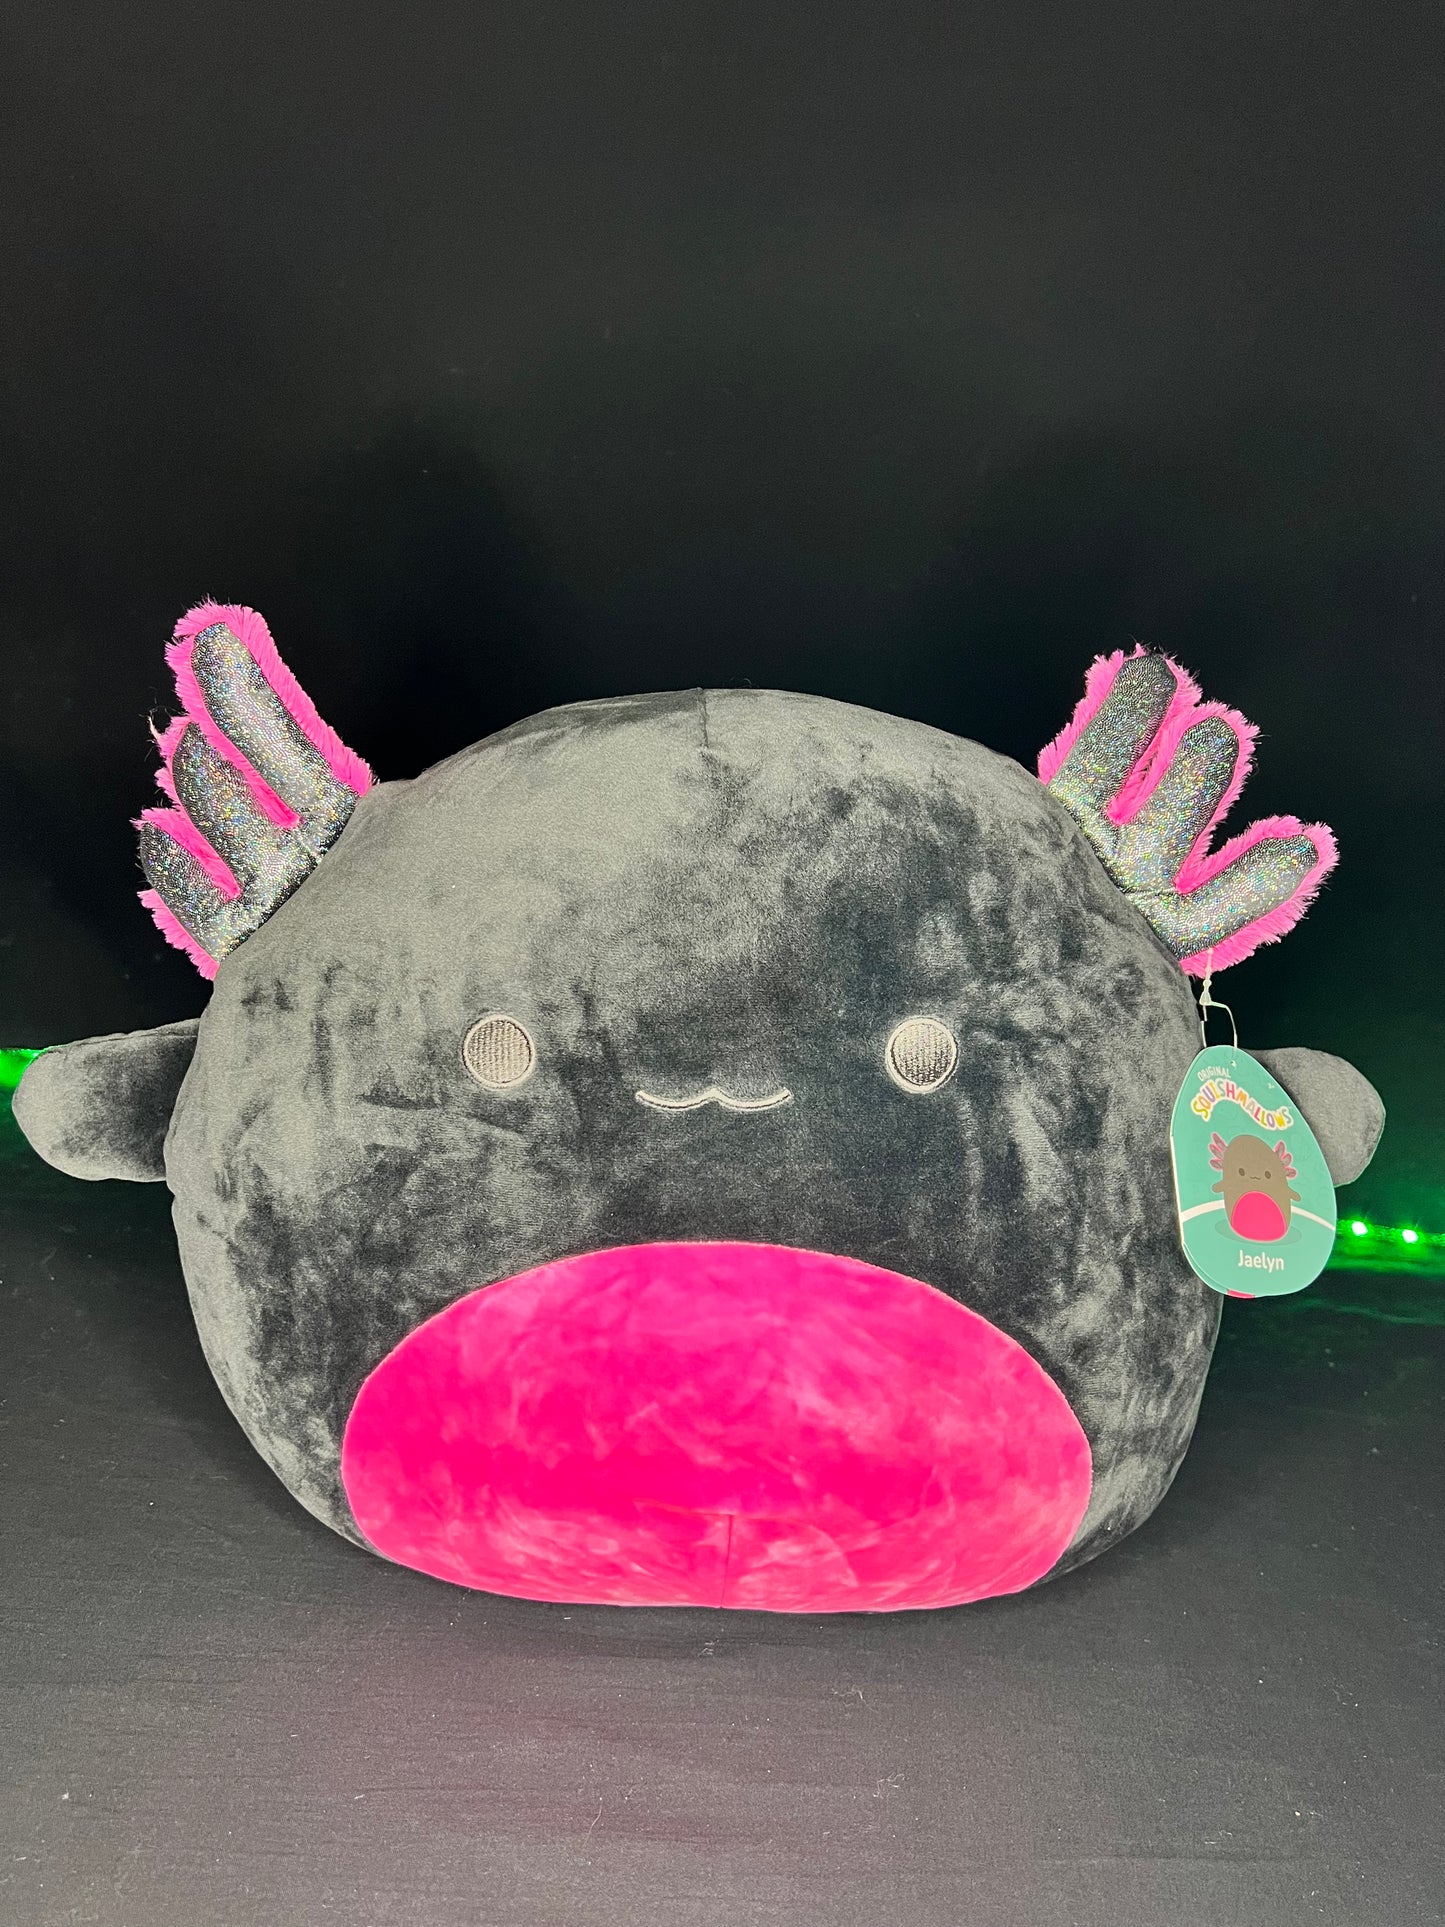 Squishmallow 14” Jaelyn the Black Pink Axolotl